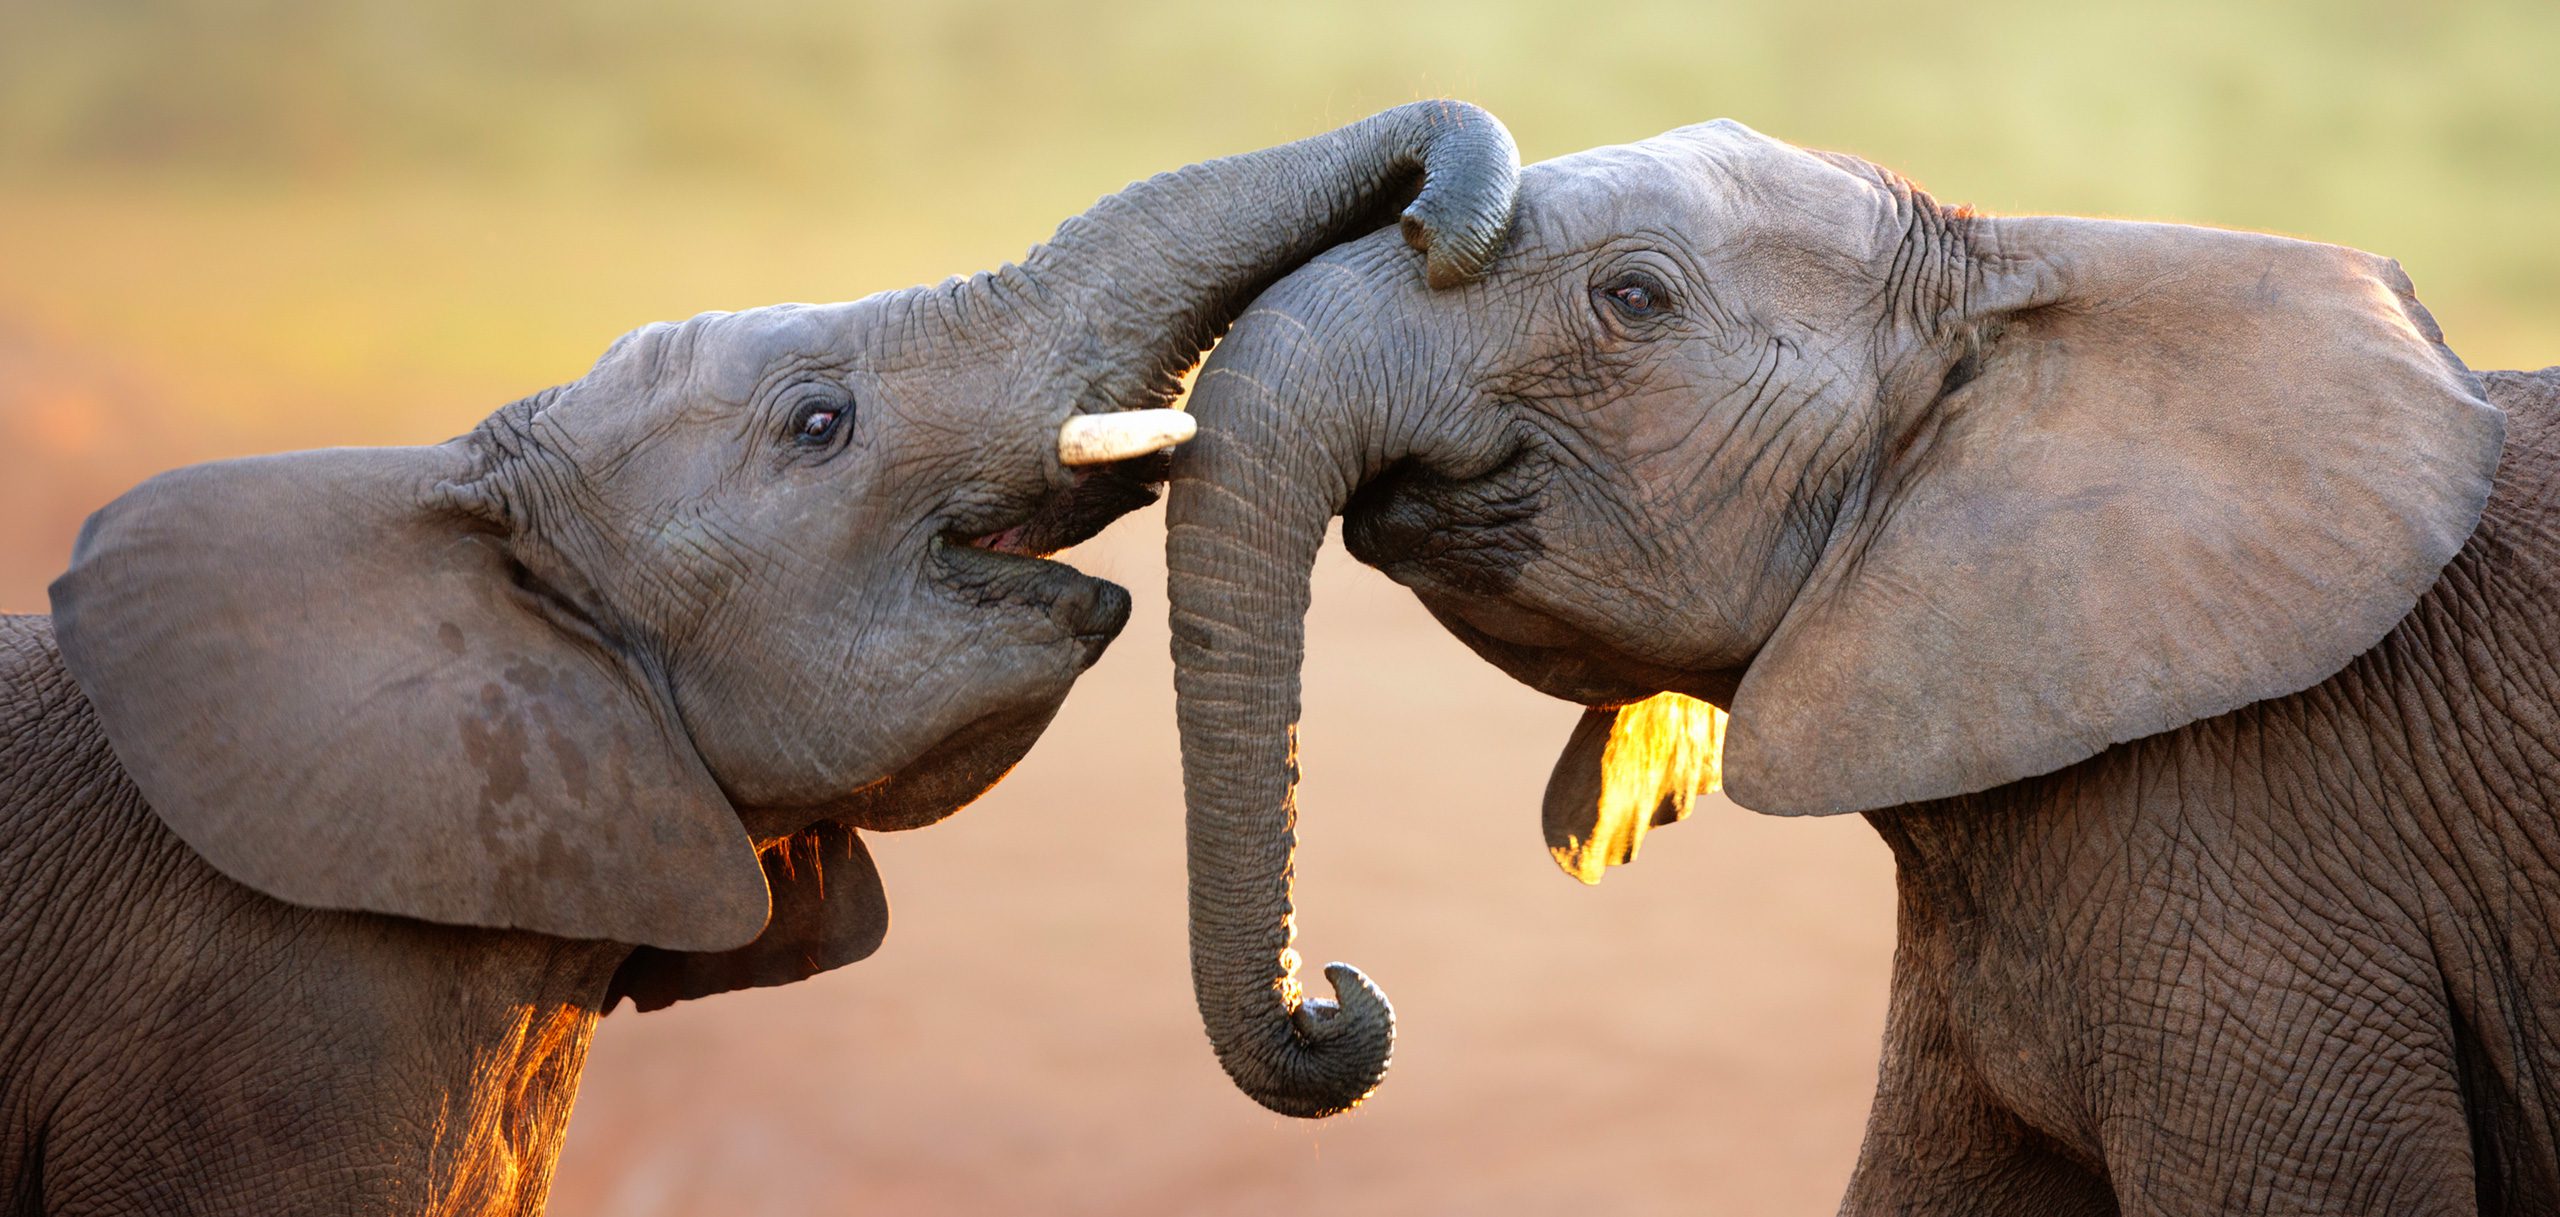 elephants playing in serengeti tanzania